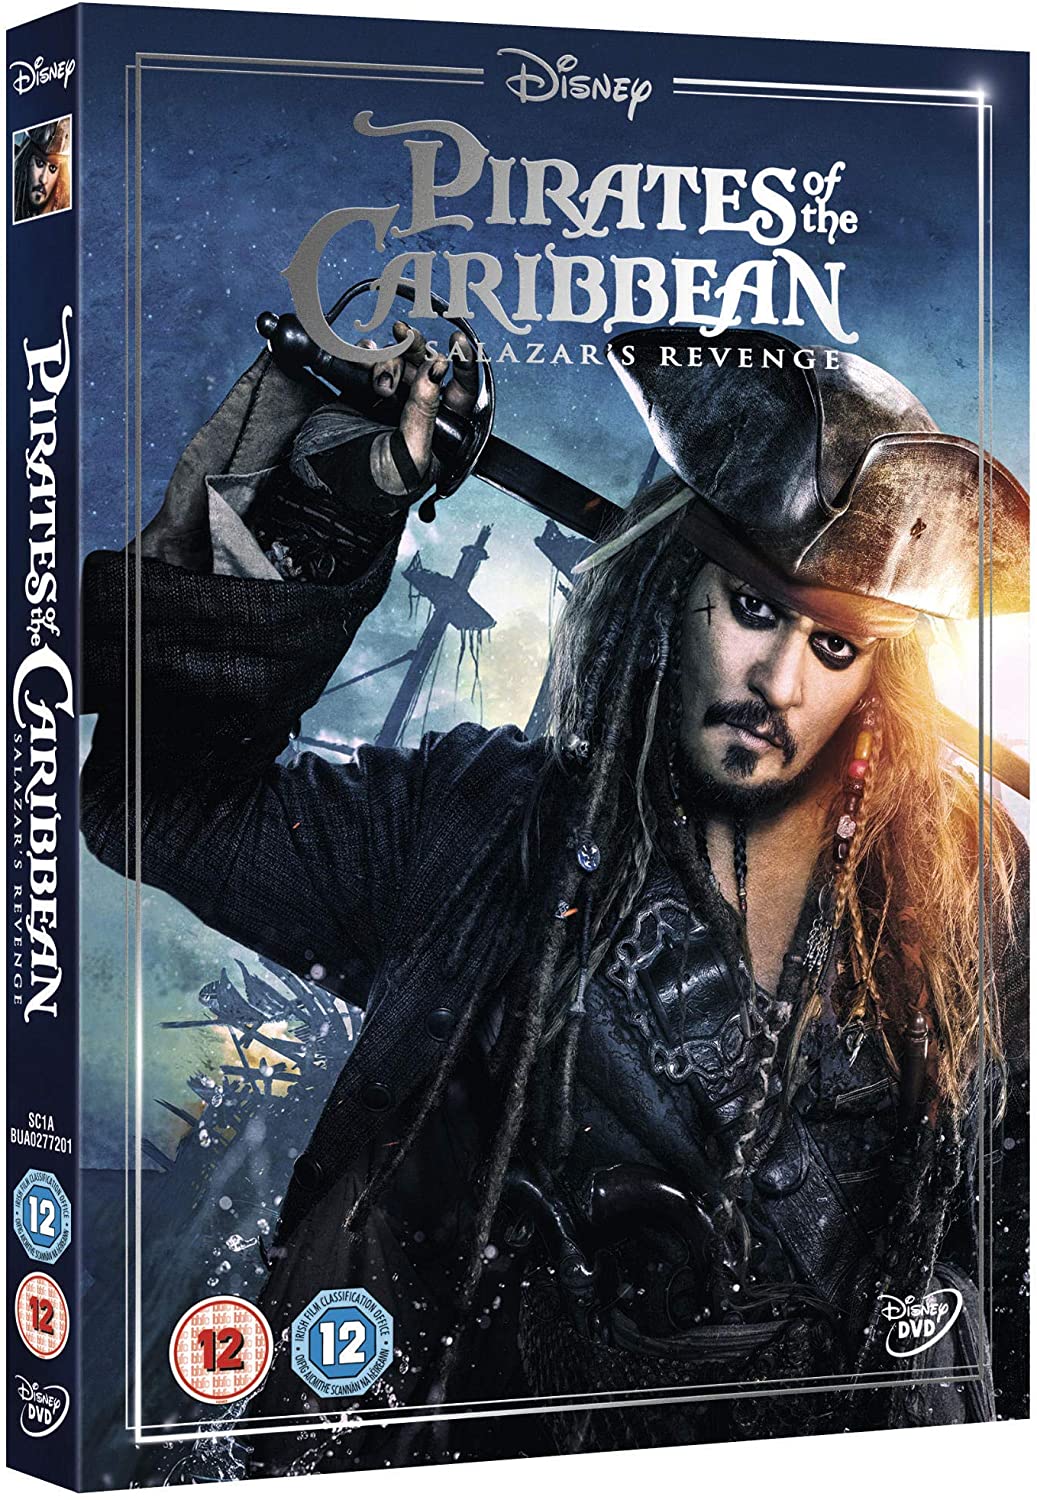 Pirates of the Caribbean: Salazar's Revenge - Adventure/Action [DVD]